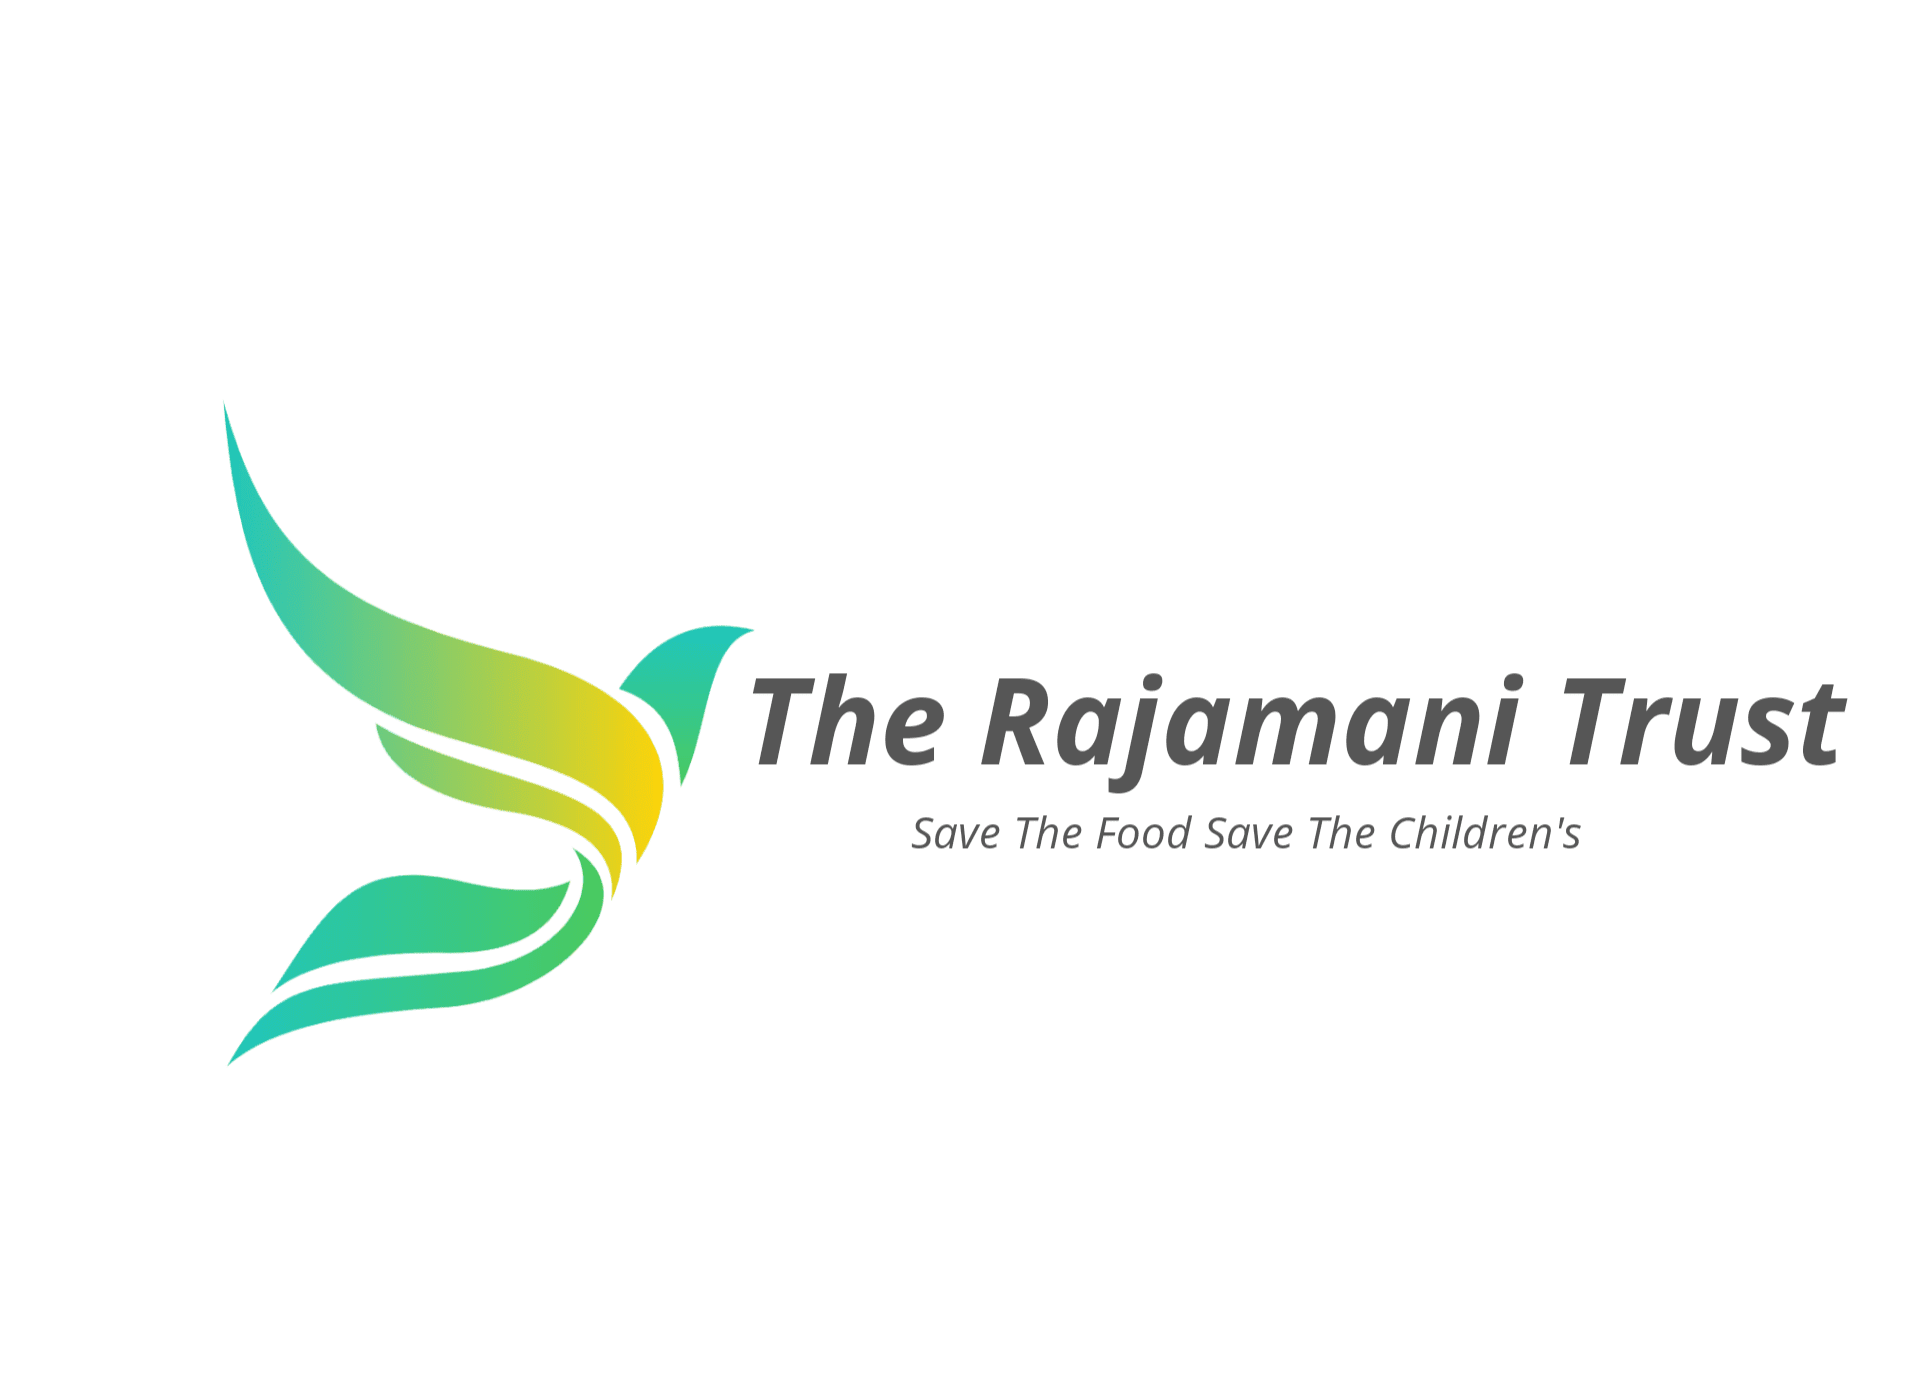 The Rajamani Trust